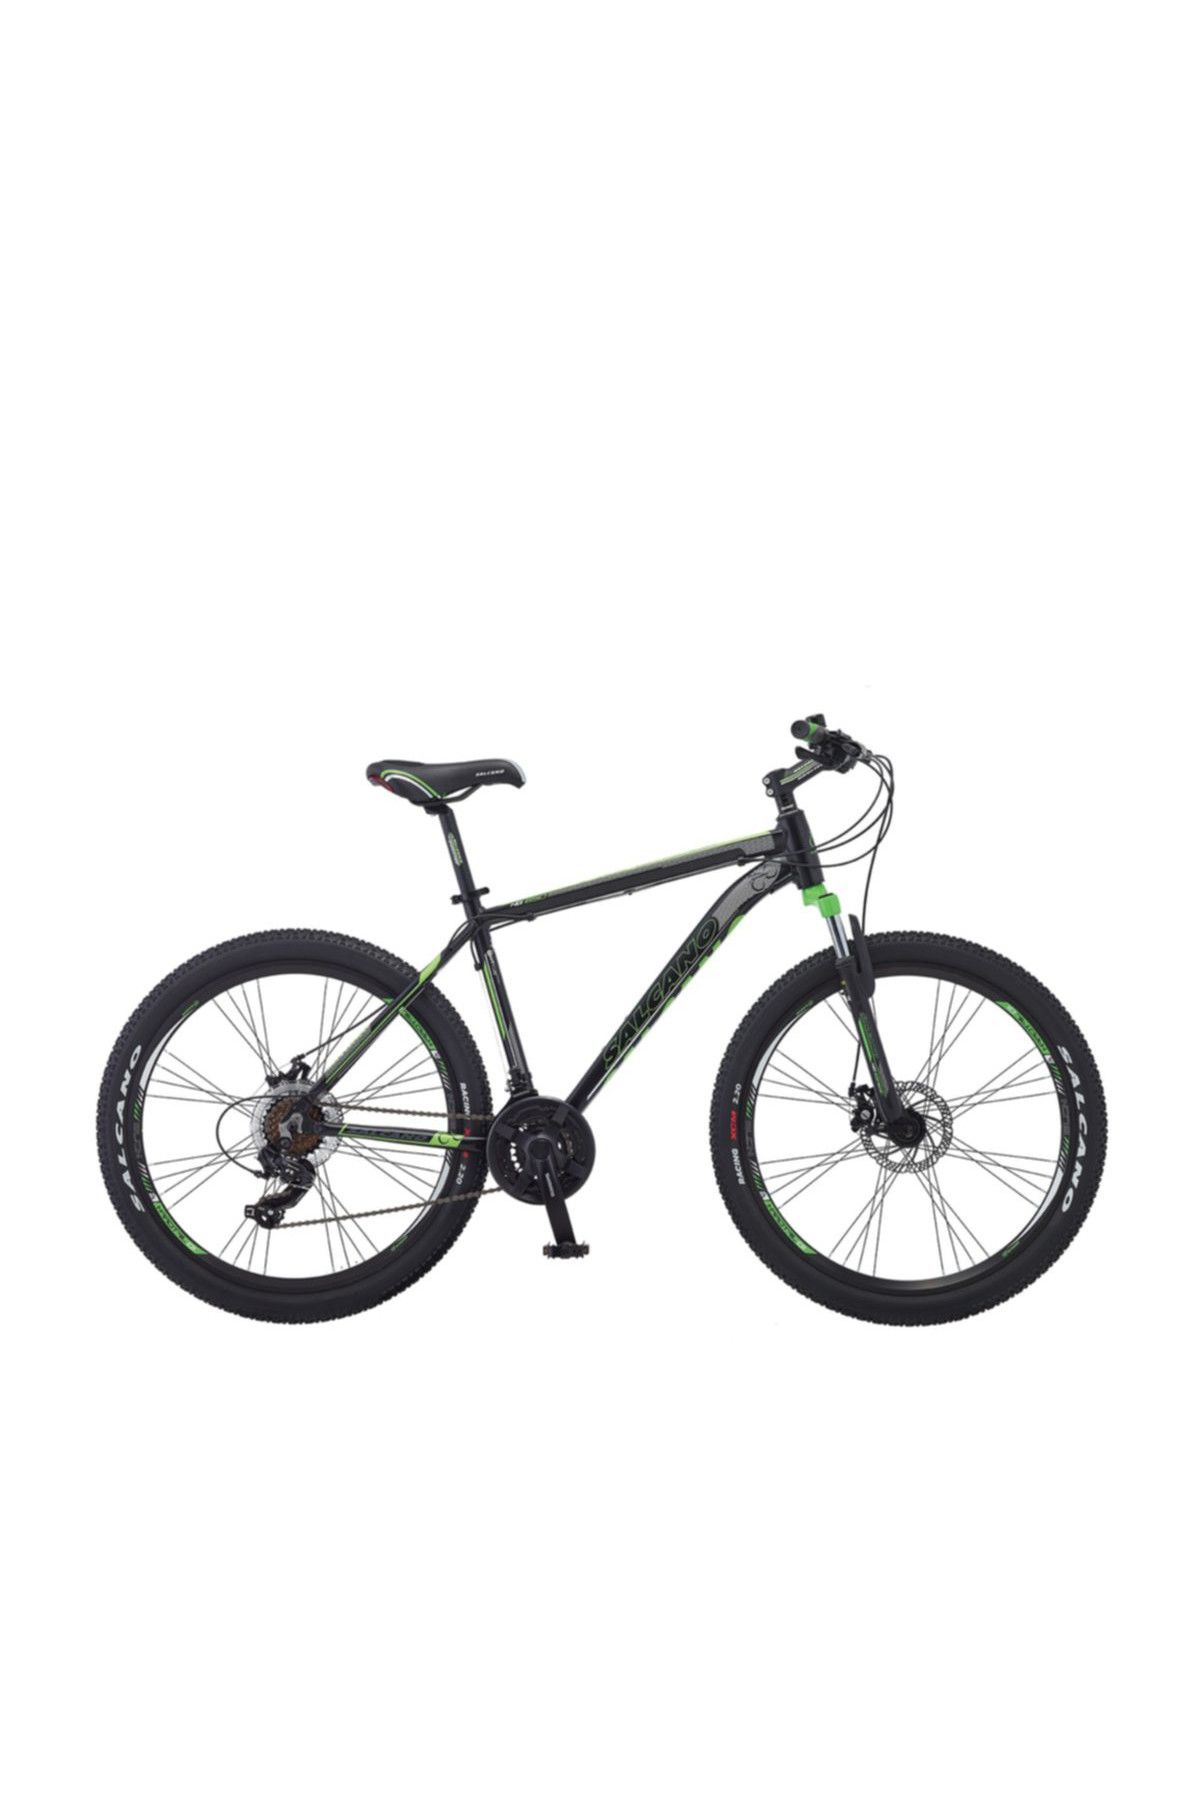 Salcano NG 650 MD 21 Vites 26 Jant Bisiklet E27 Mat Siyah Yeşil Beyaz